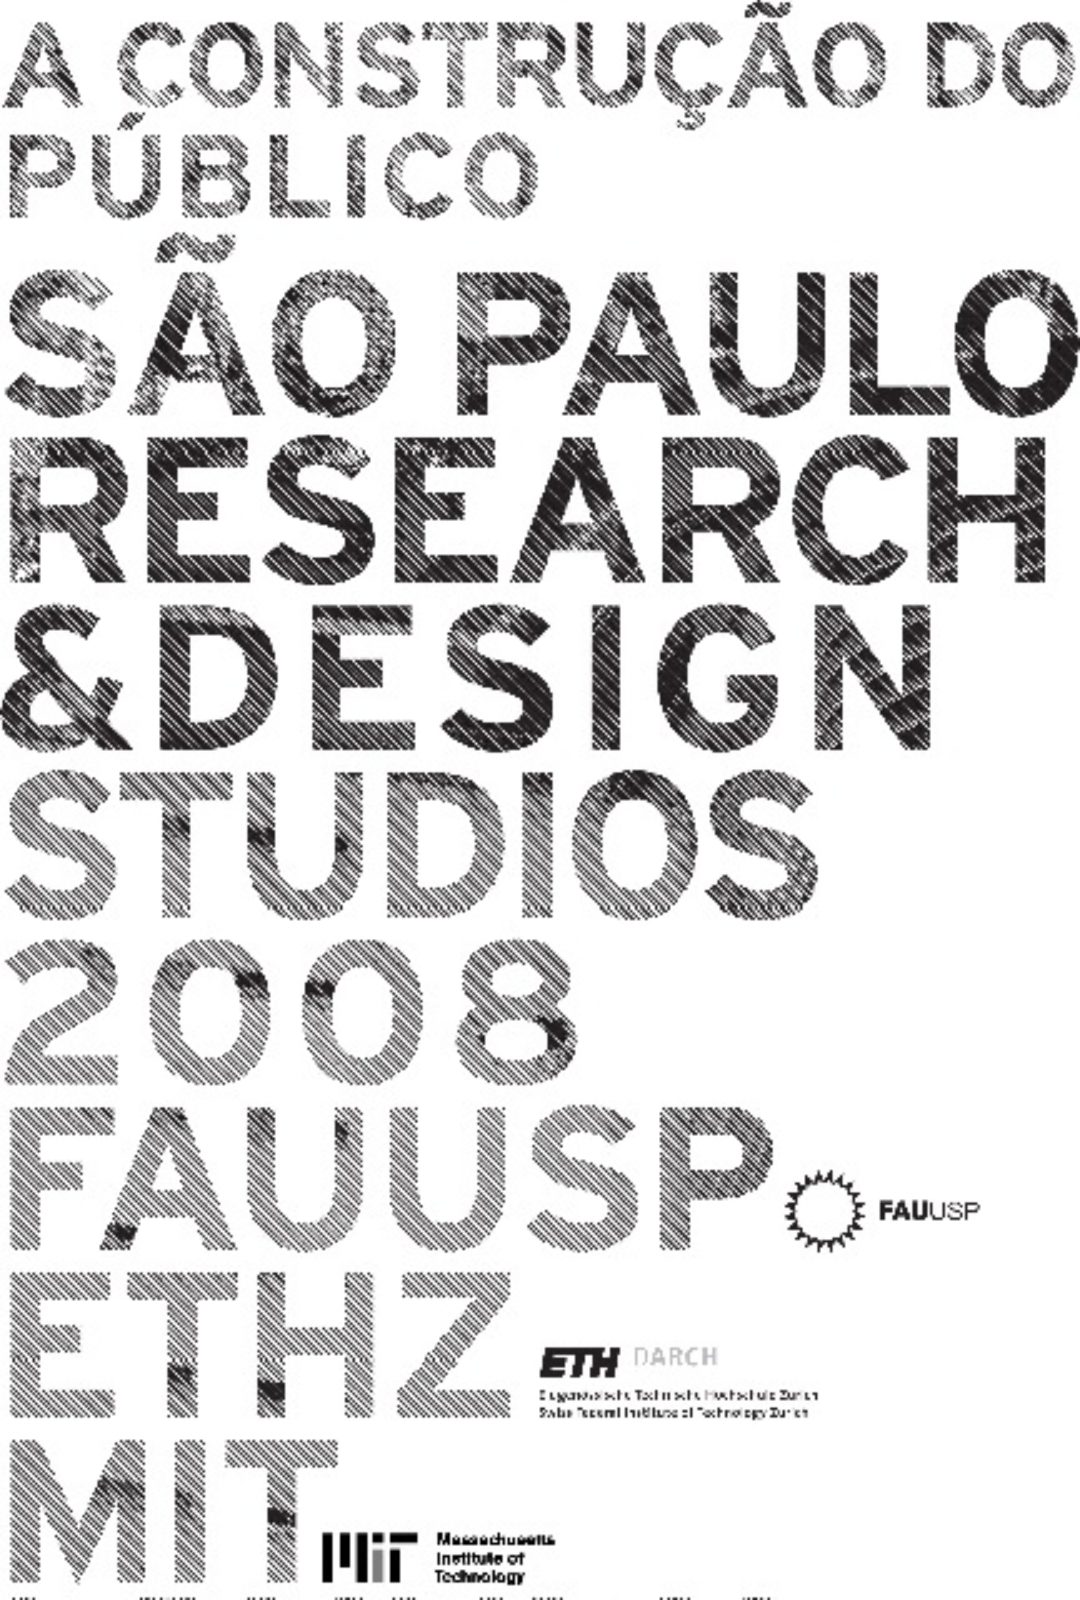 Sao Paulo. Research + Design Workshops Sao Paulo